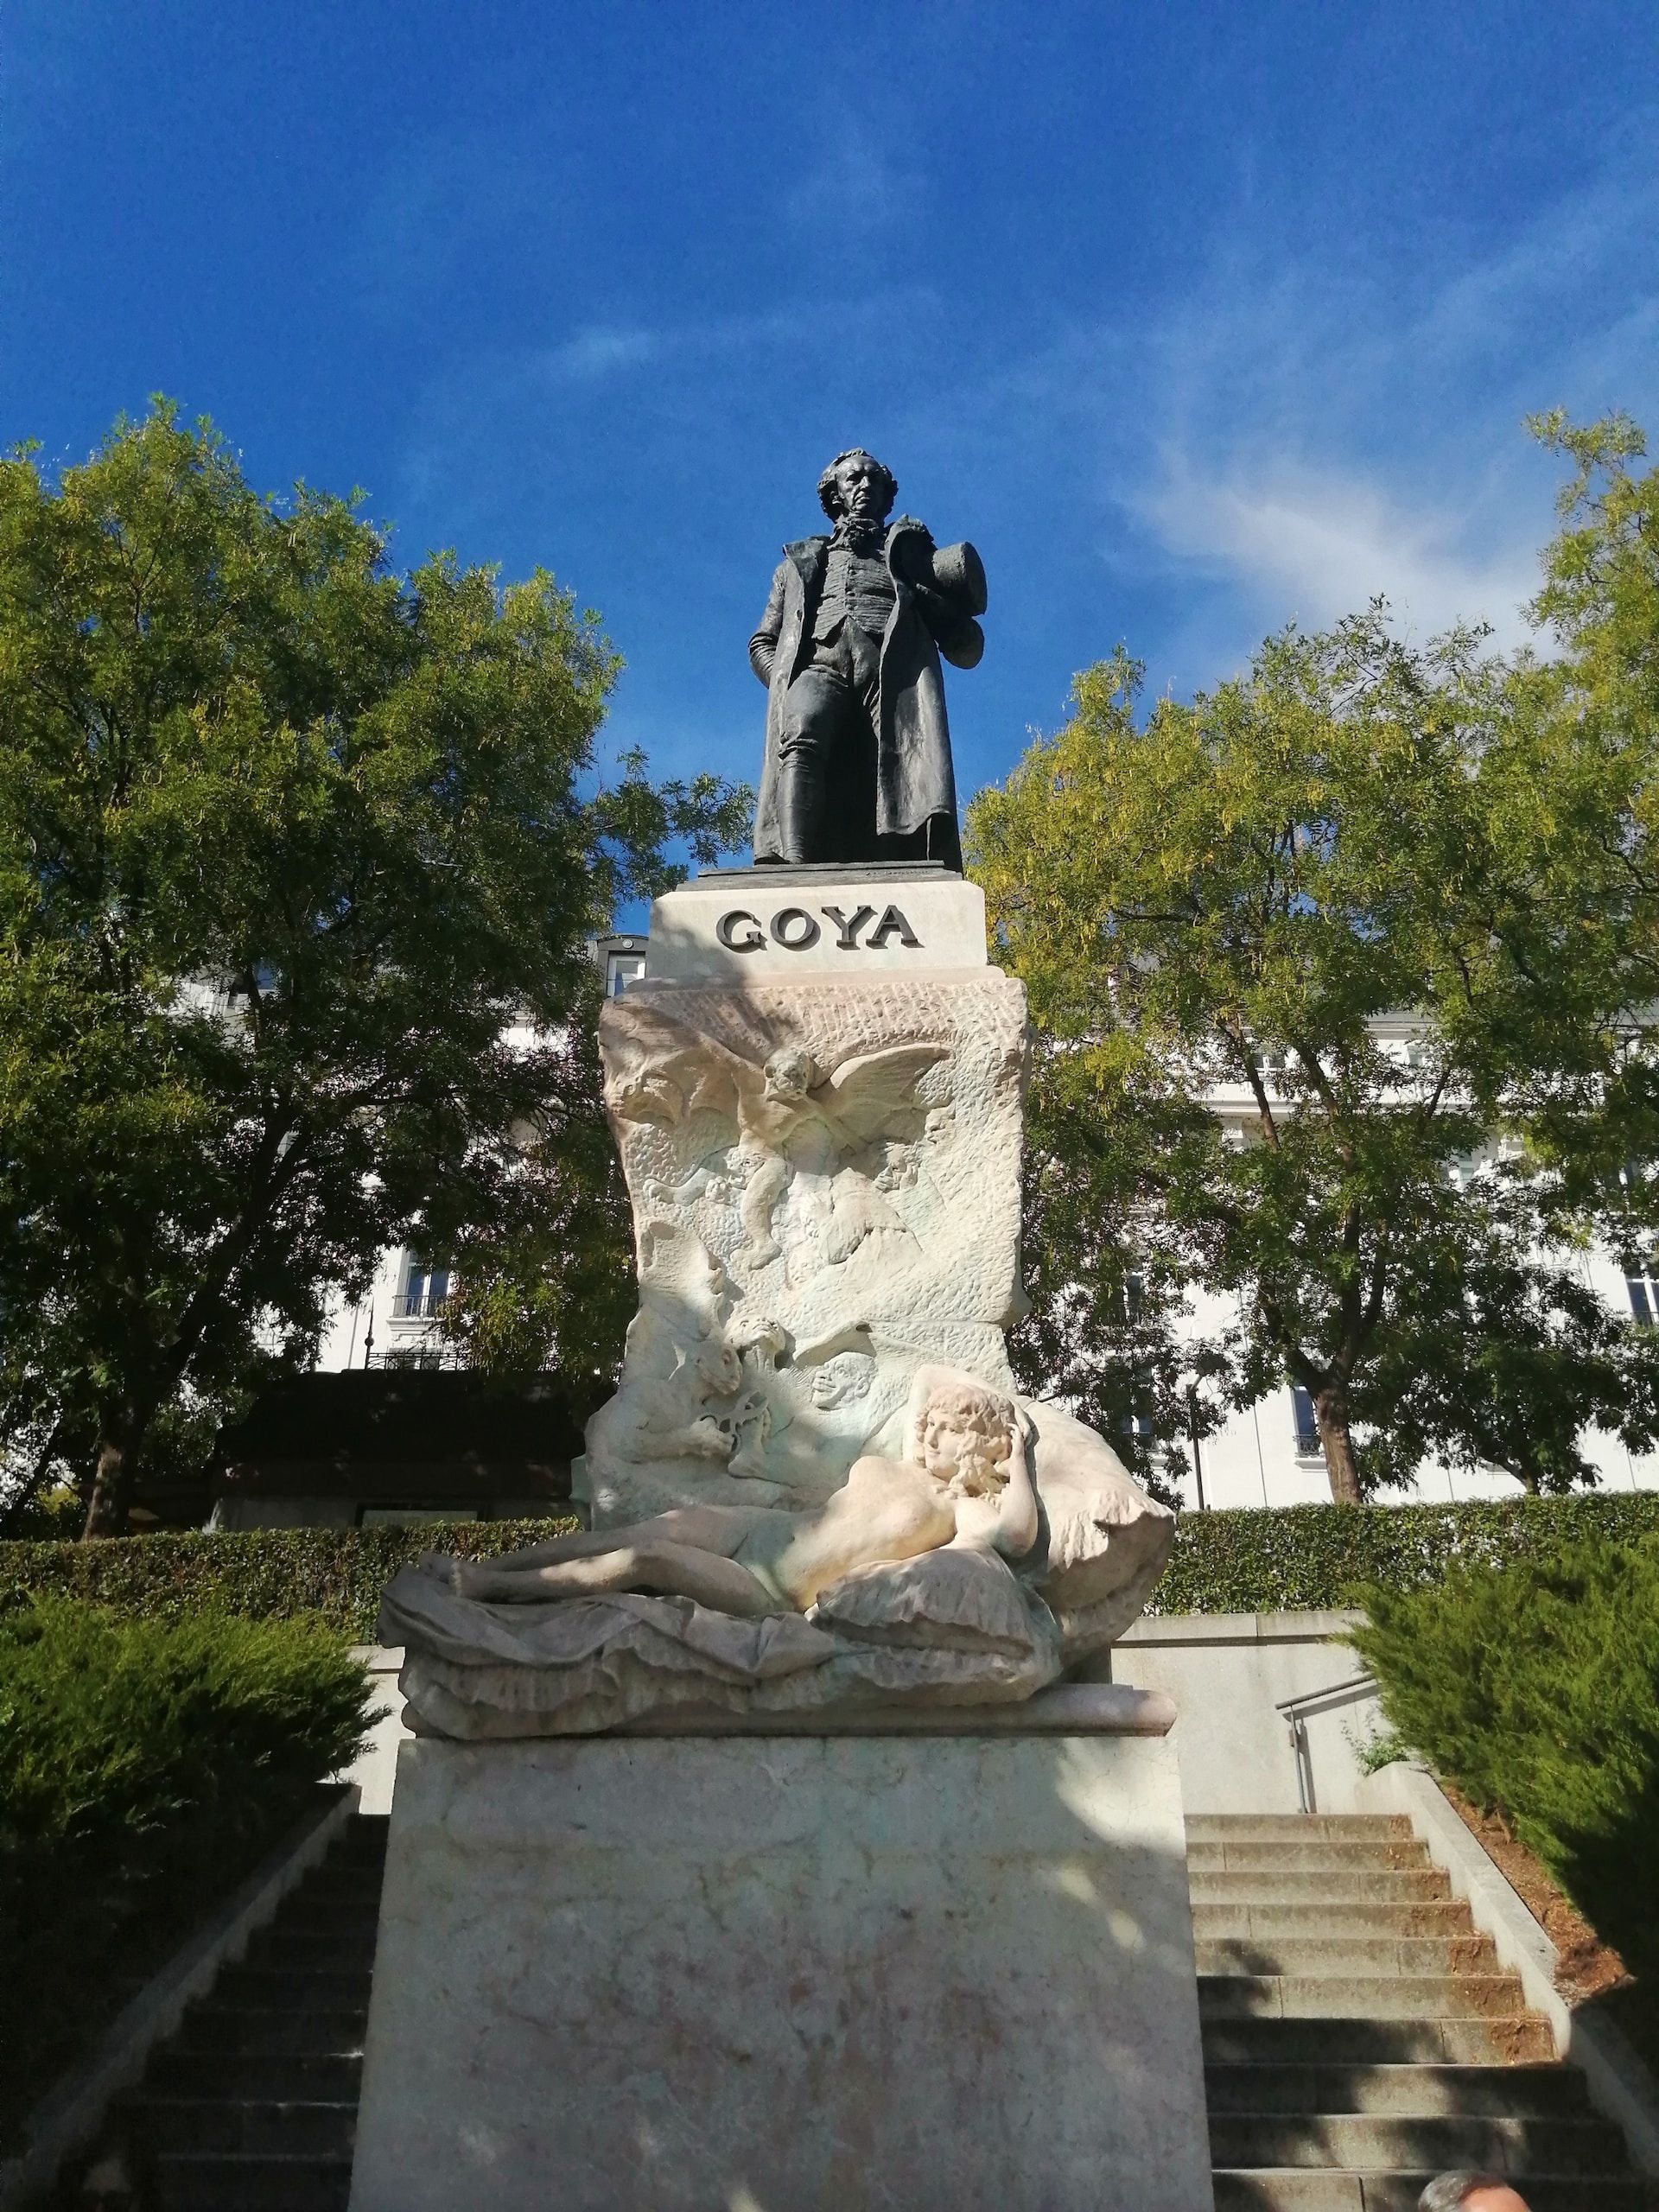 The Goya Statue at the Goya Gate